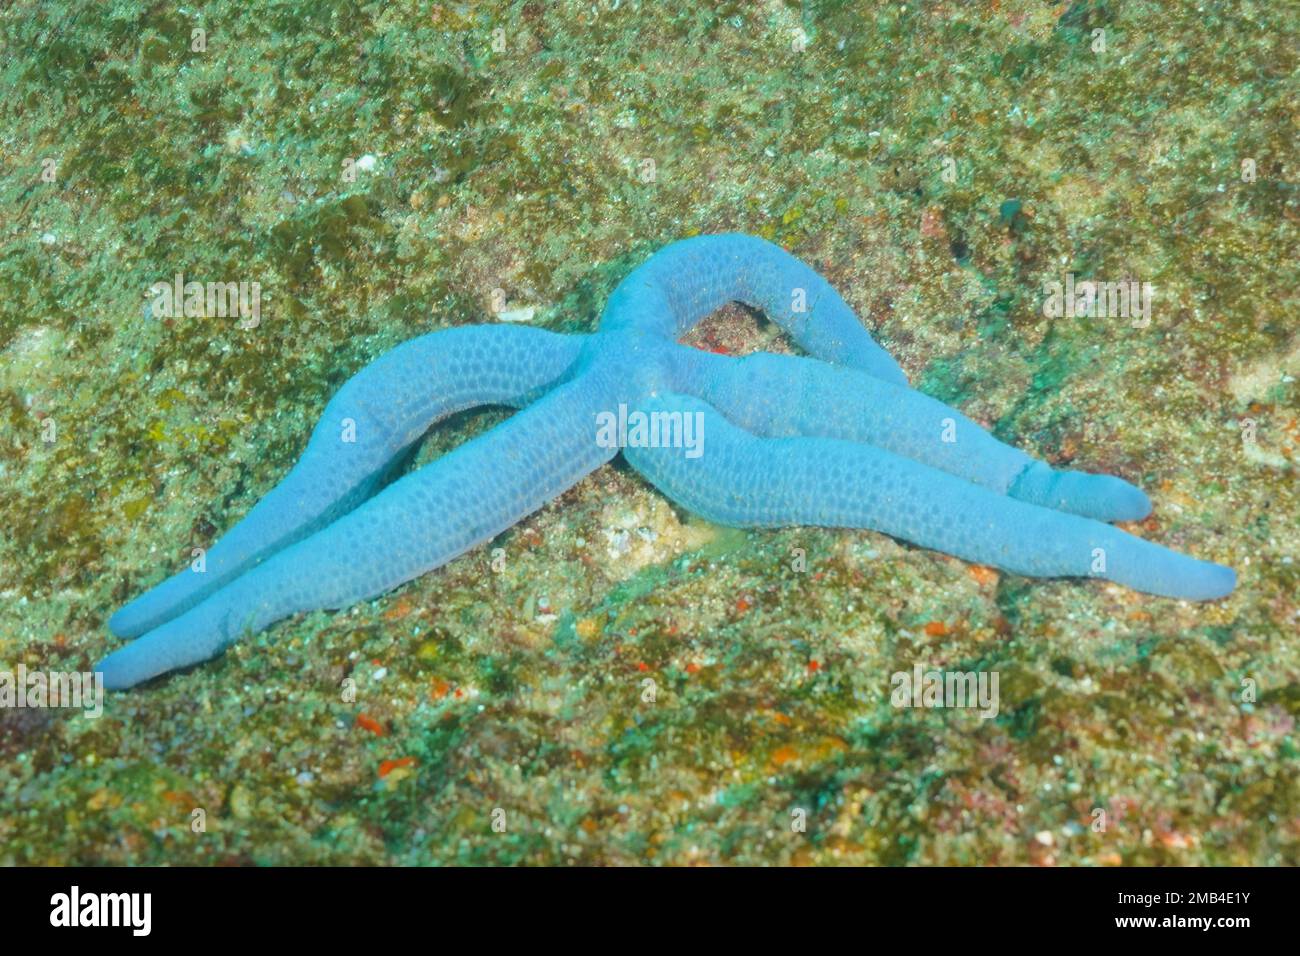 linckia blu (Linckia laevigata), colorazione blu. Aliwal Shoal Dive Site, Umkomaas, KwaZulu Natal, Sudafrica Foto Stock